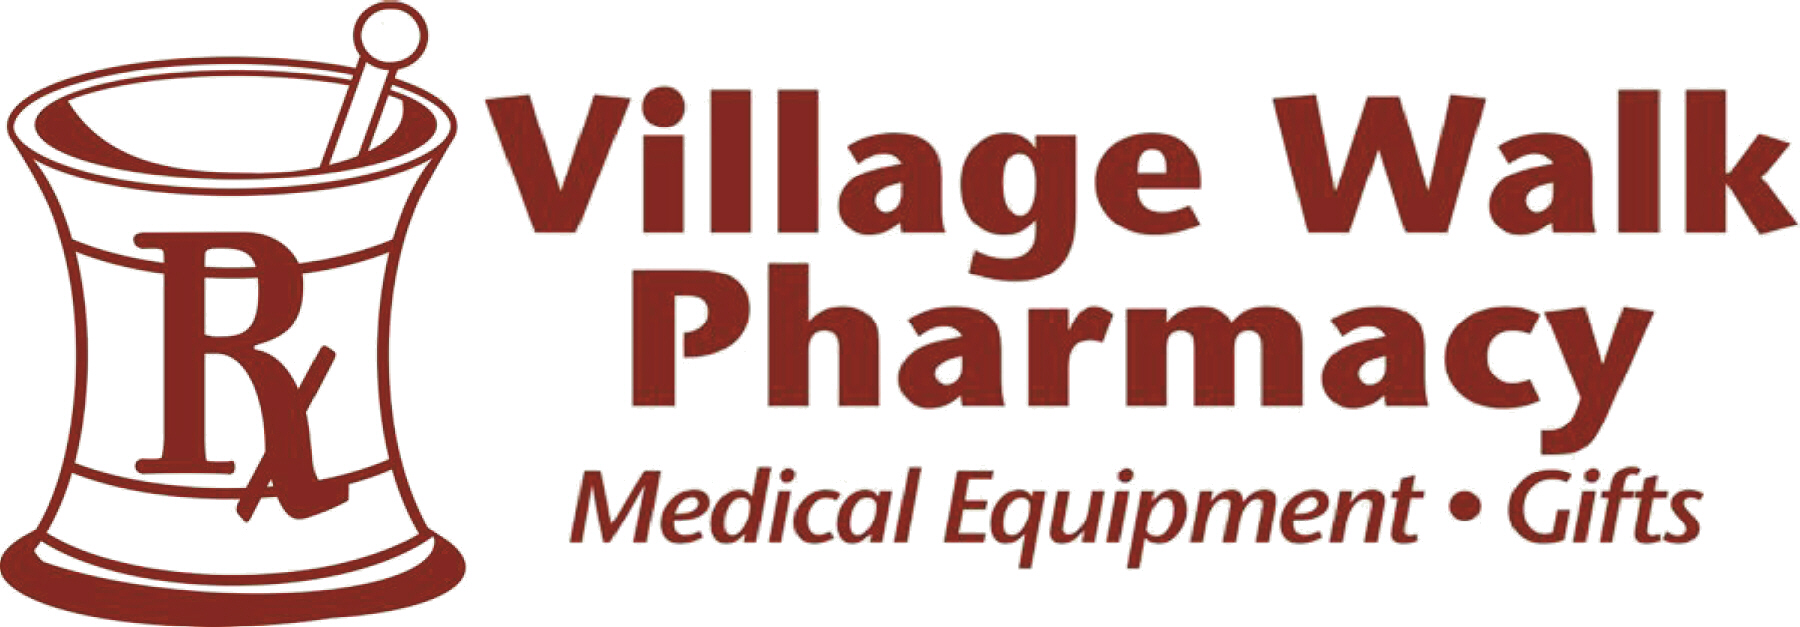 Village Walk pharmacy